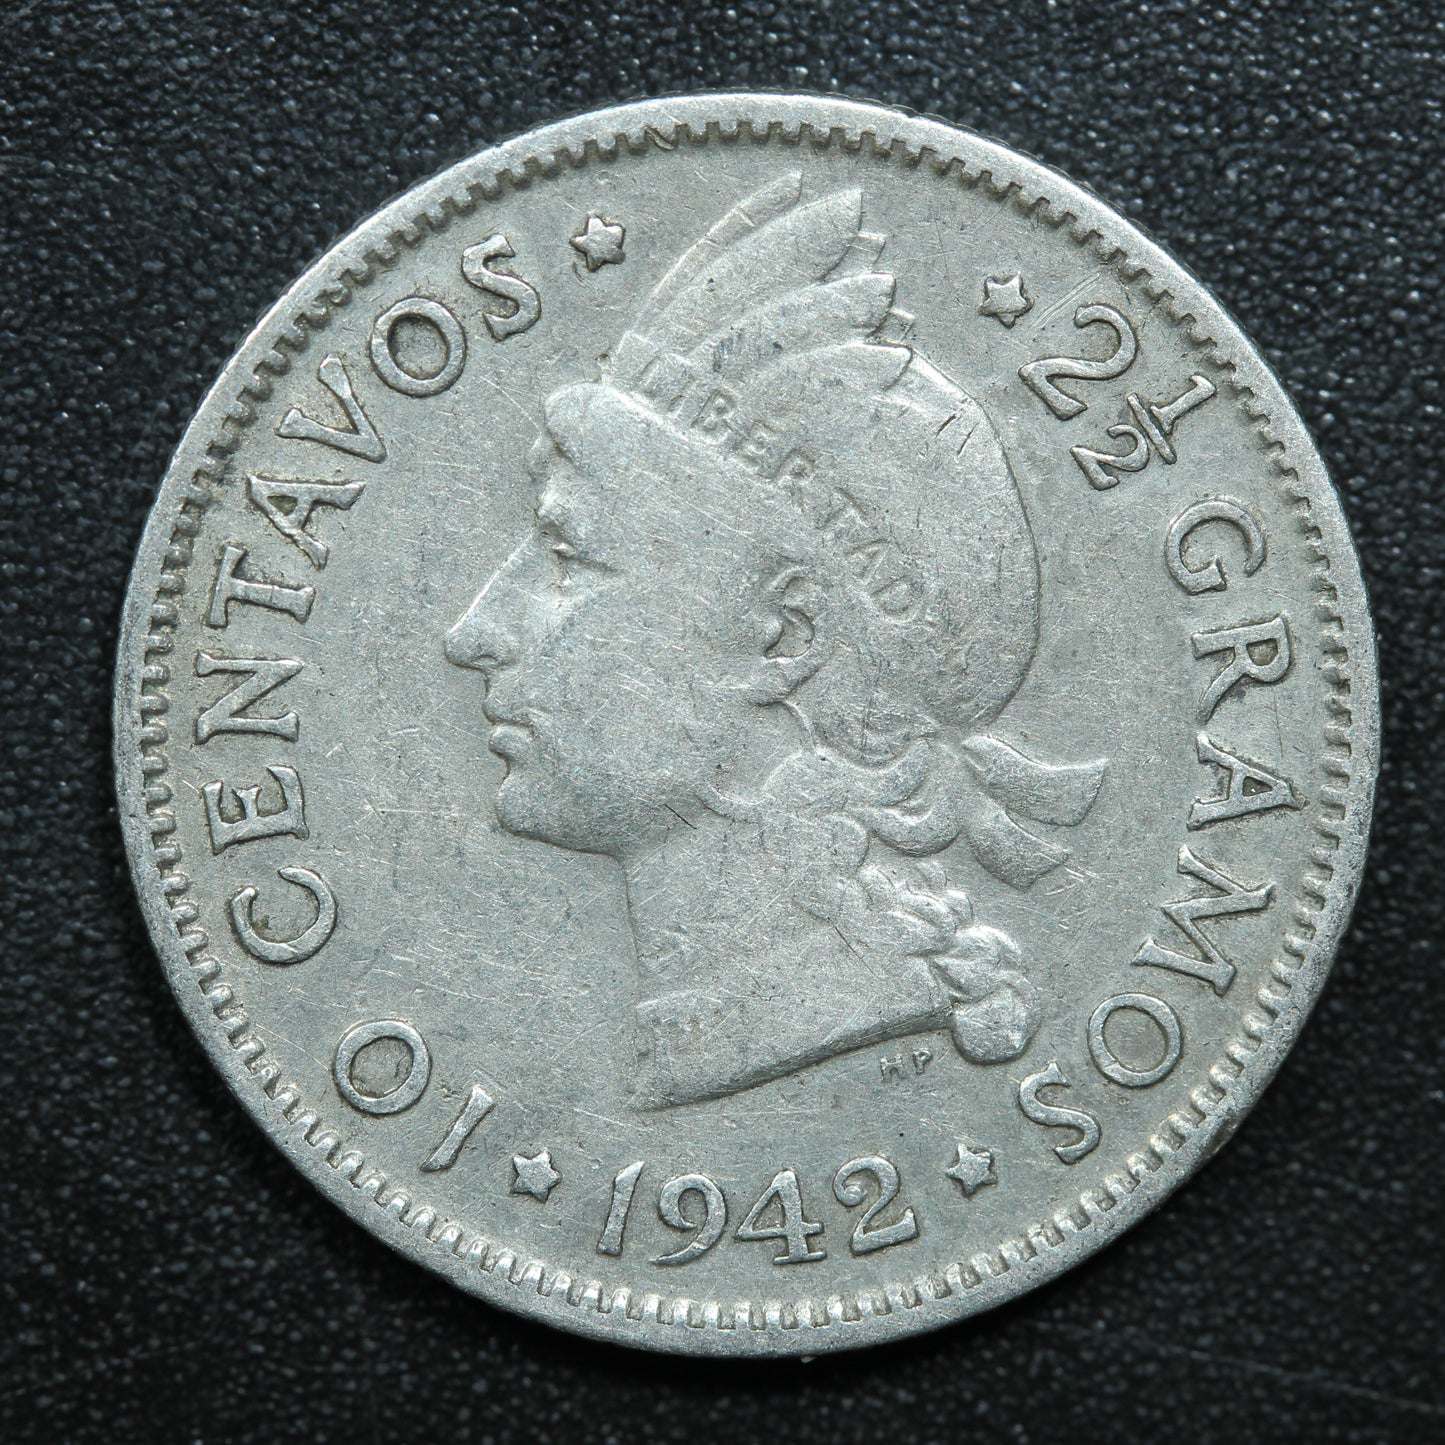 1942 Dominican Republic 10 Centavos Silver Coin KM #19